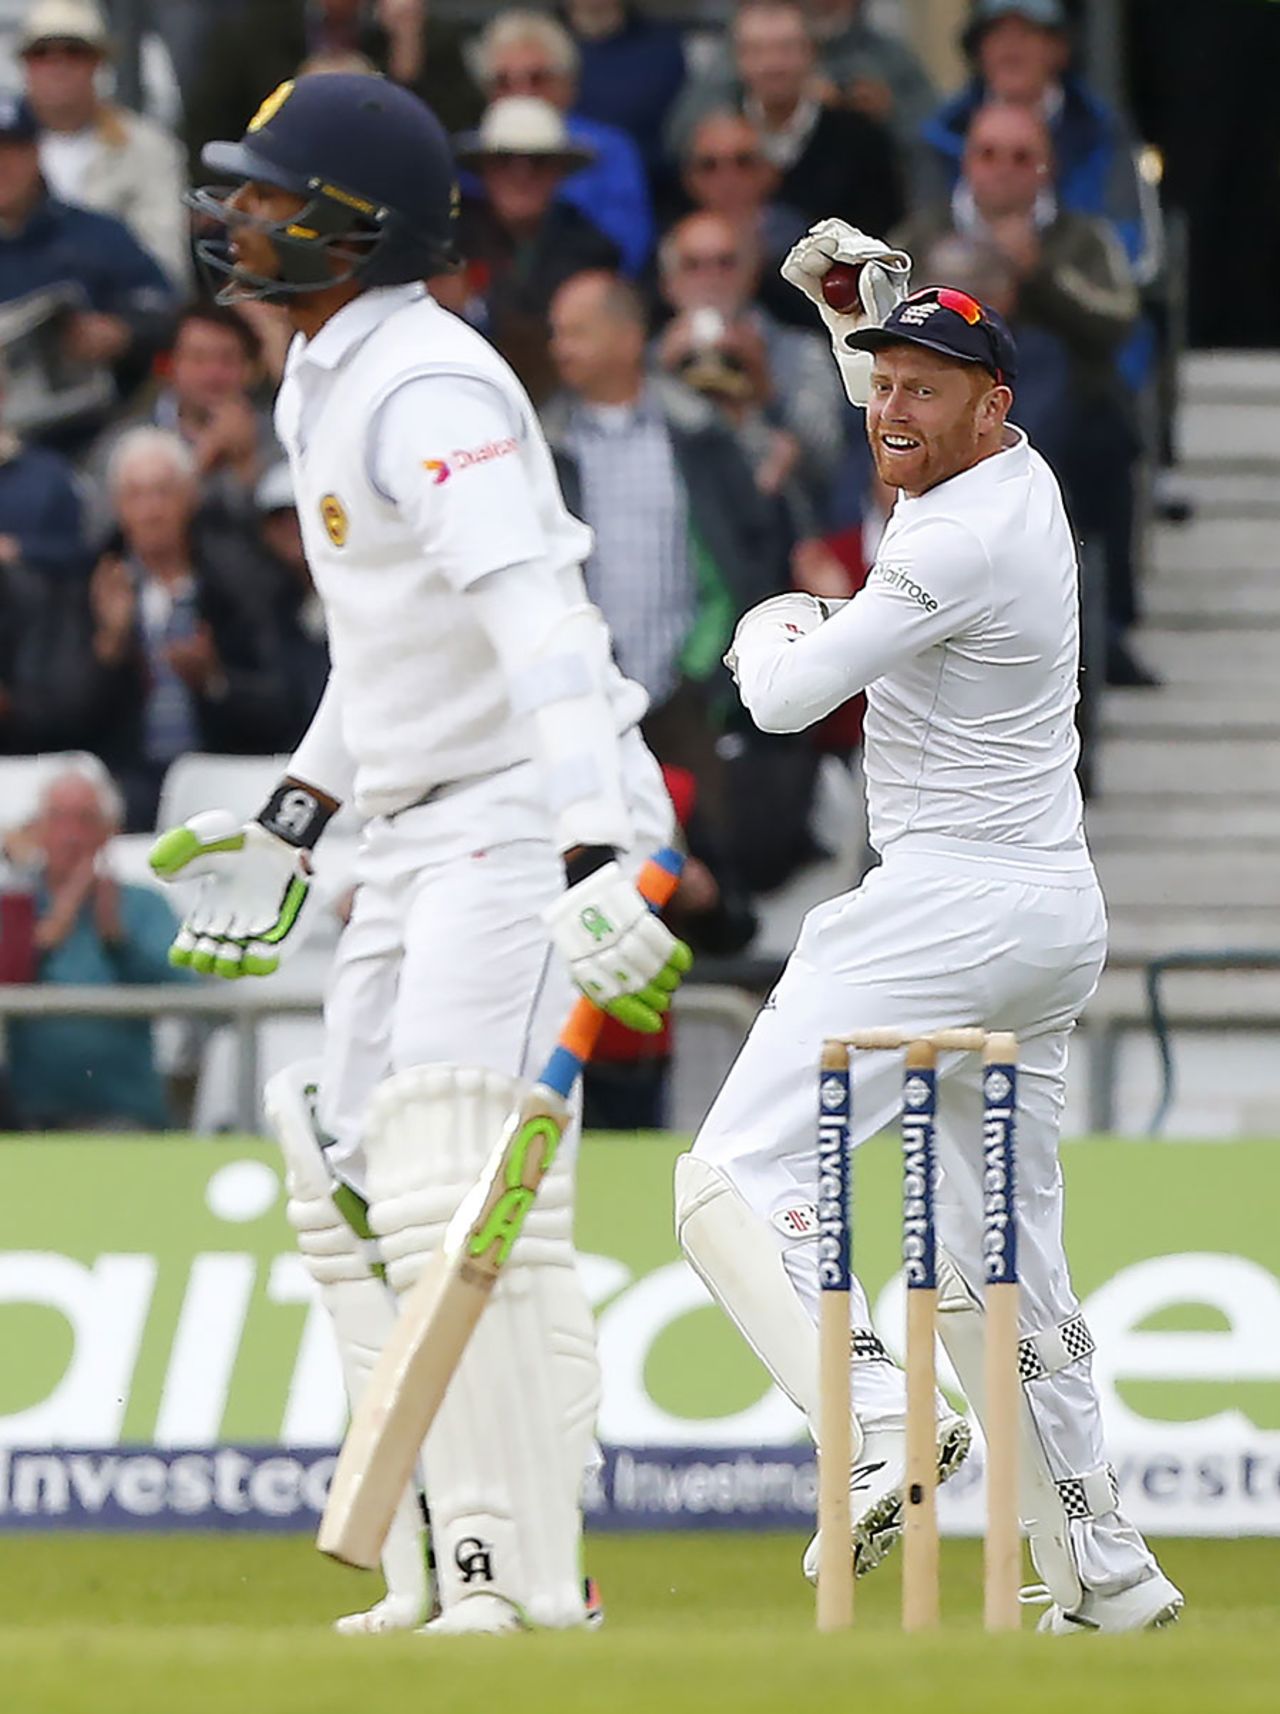 Jonny Bairstow took five catches to follow his hundred, England v Sri Lanka, 1st Test, Headingley, 2nd day, May 20, 2016